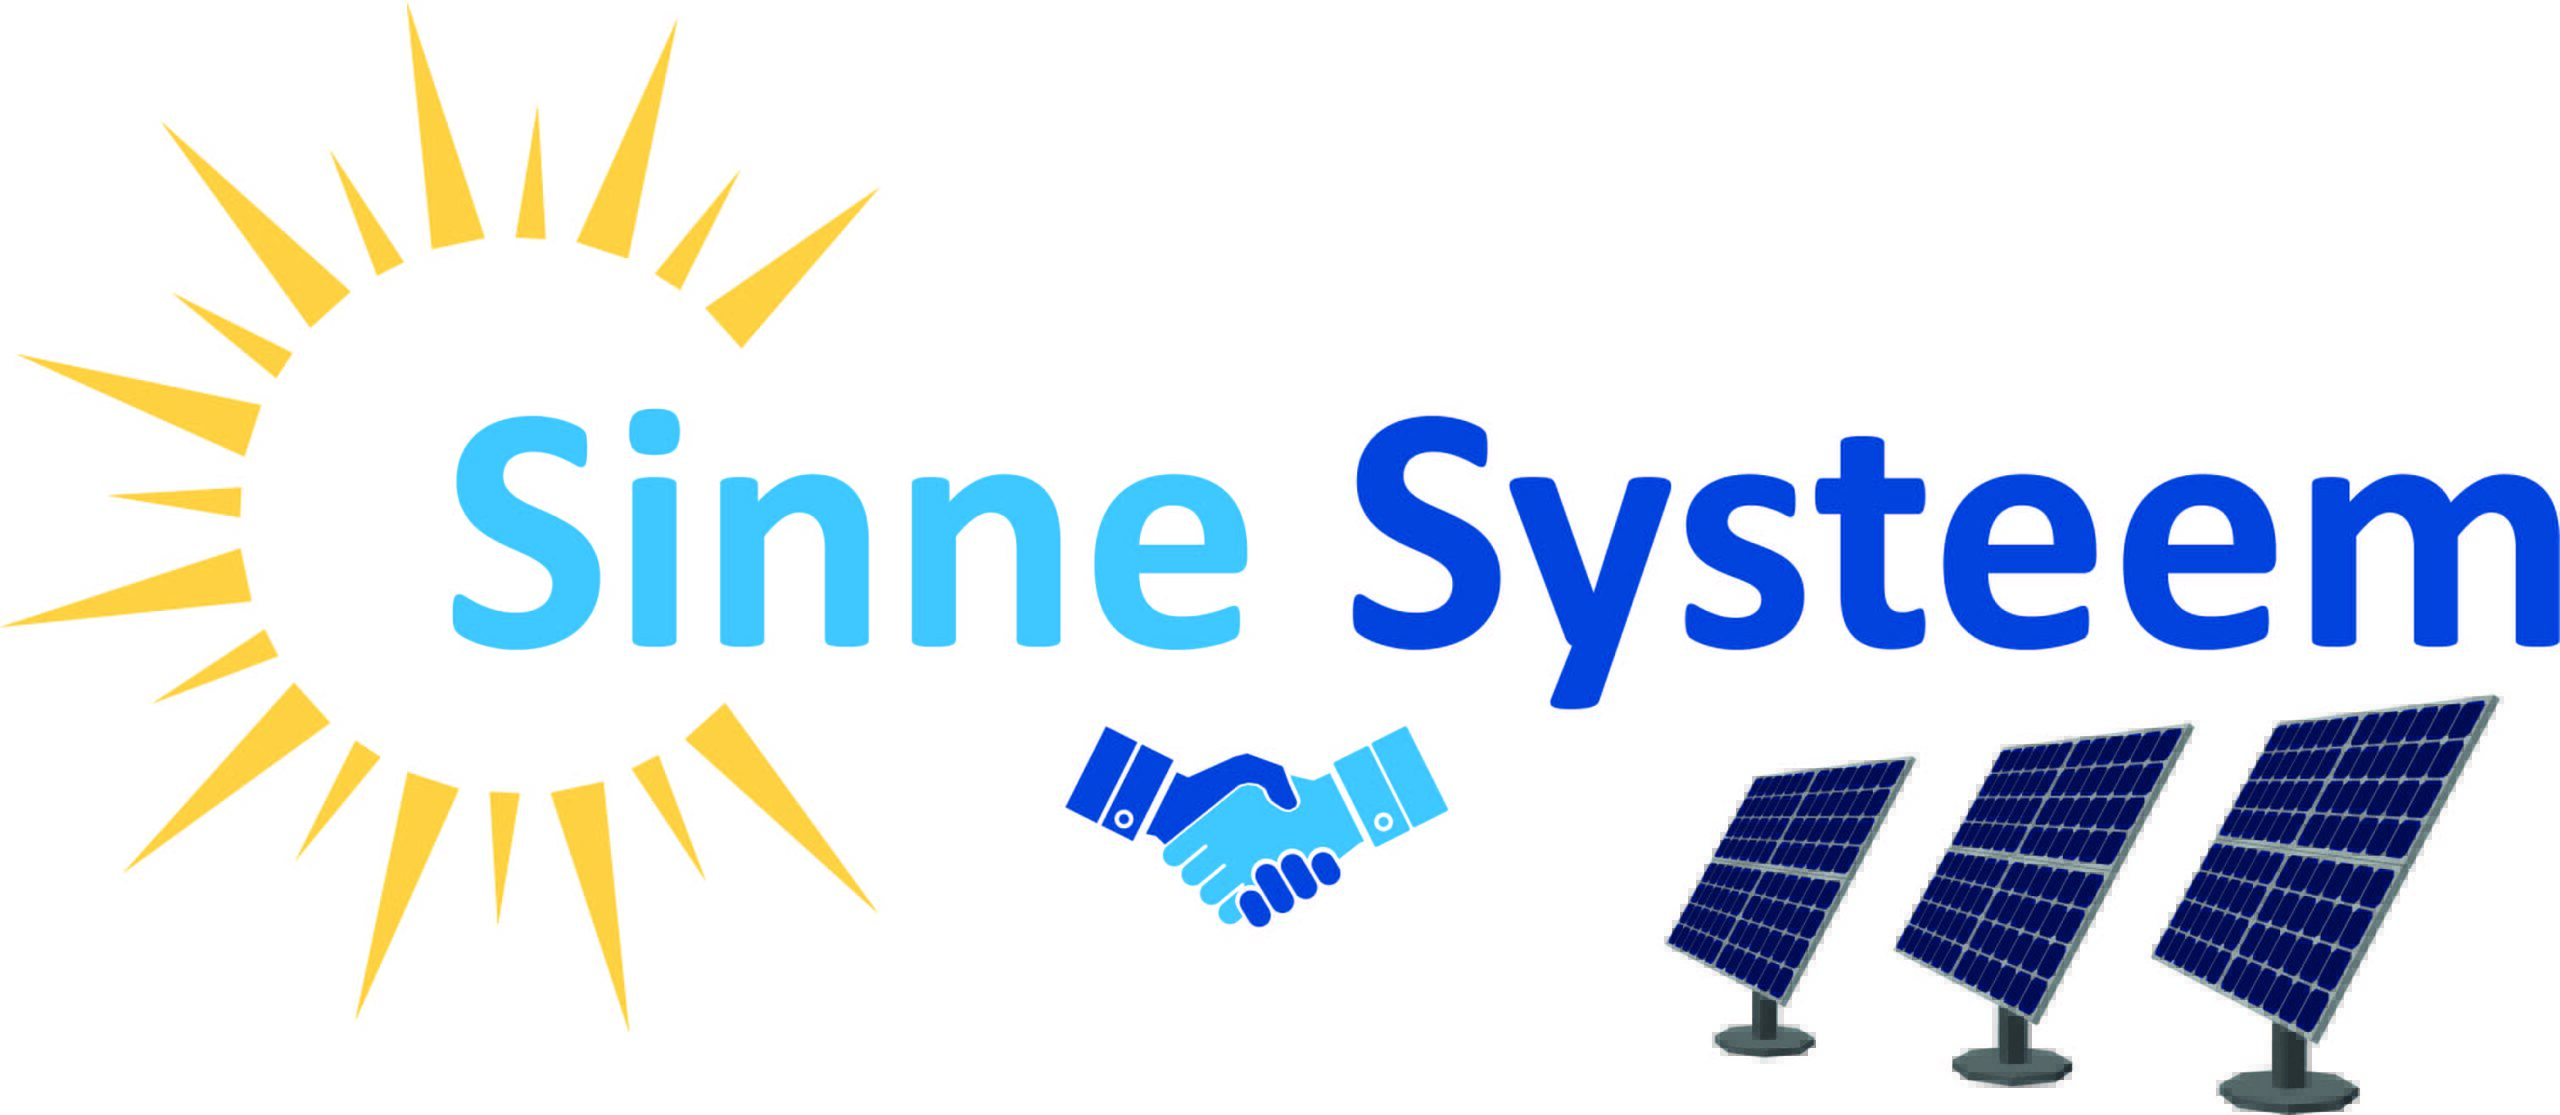 SinneSysteem logo